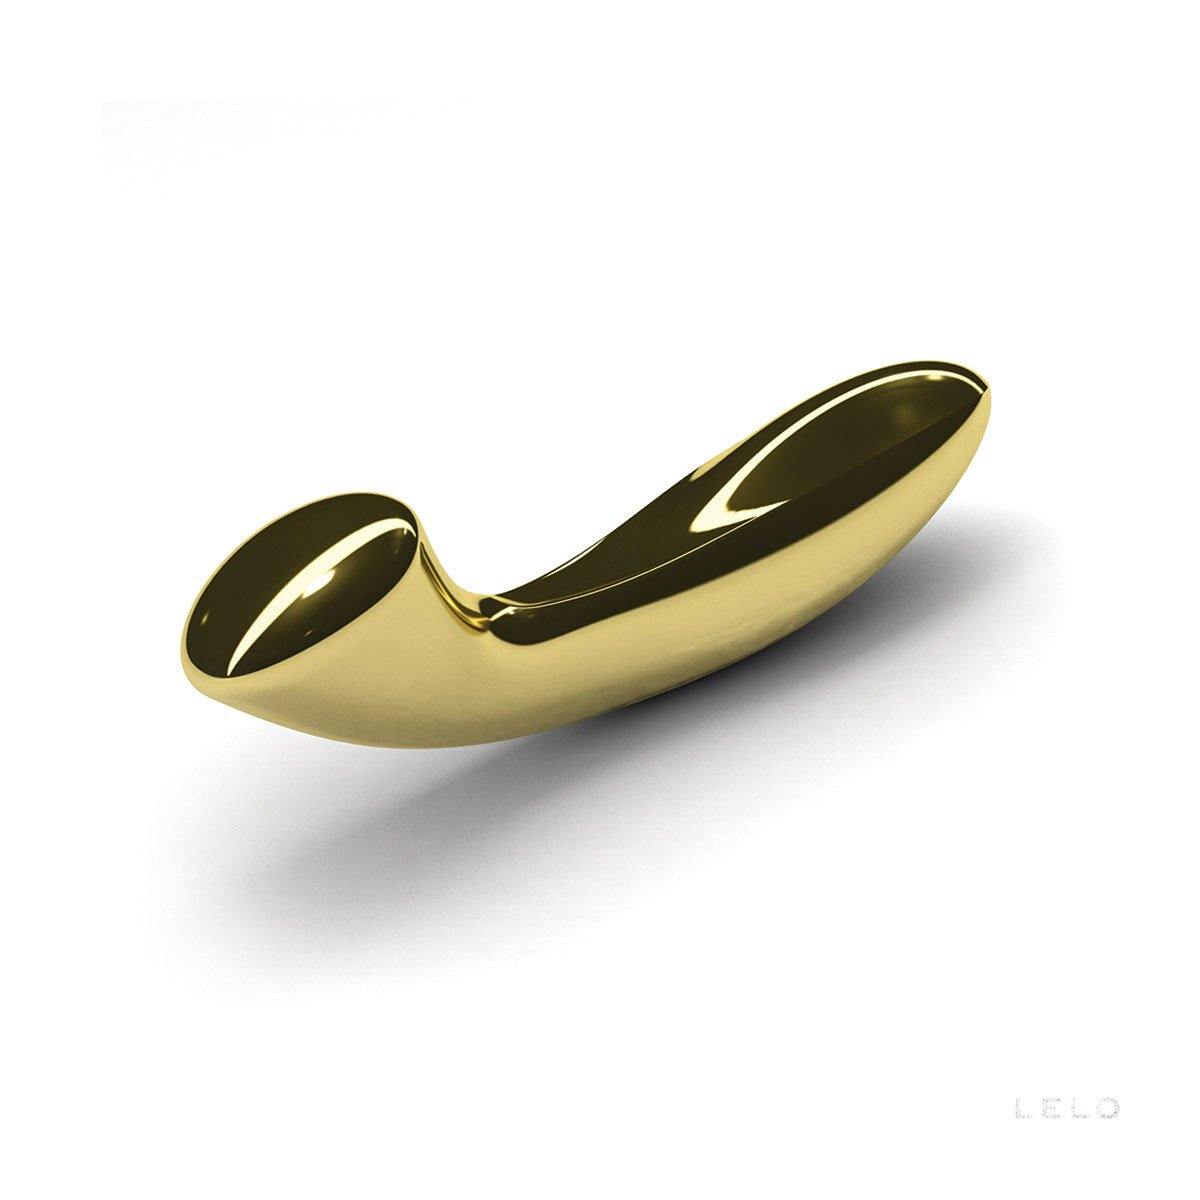 Lelo Olga 24K Gold - Buy At Luxury Toy X - Free 3-Day Shipping